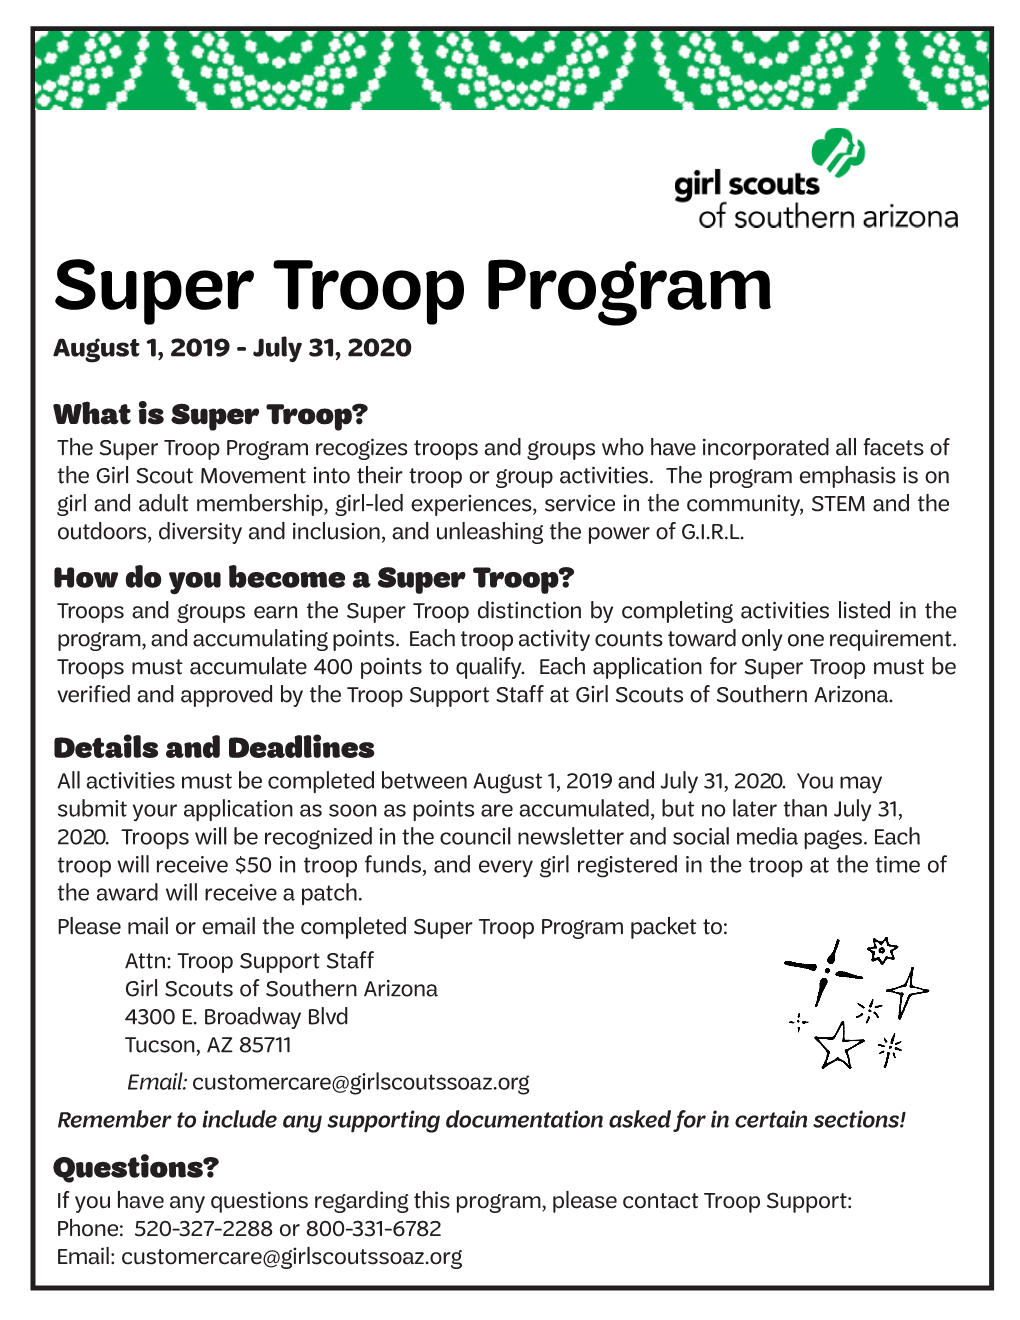 Super Troop Program Guidelines